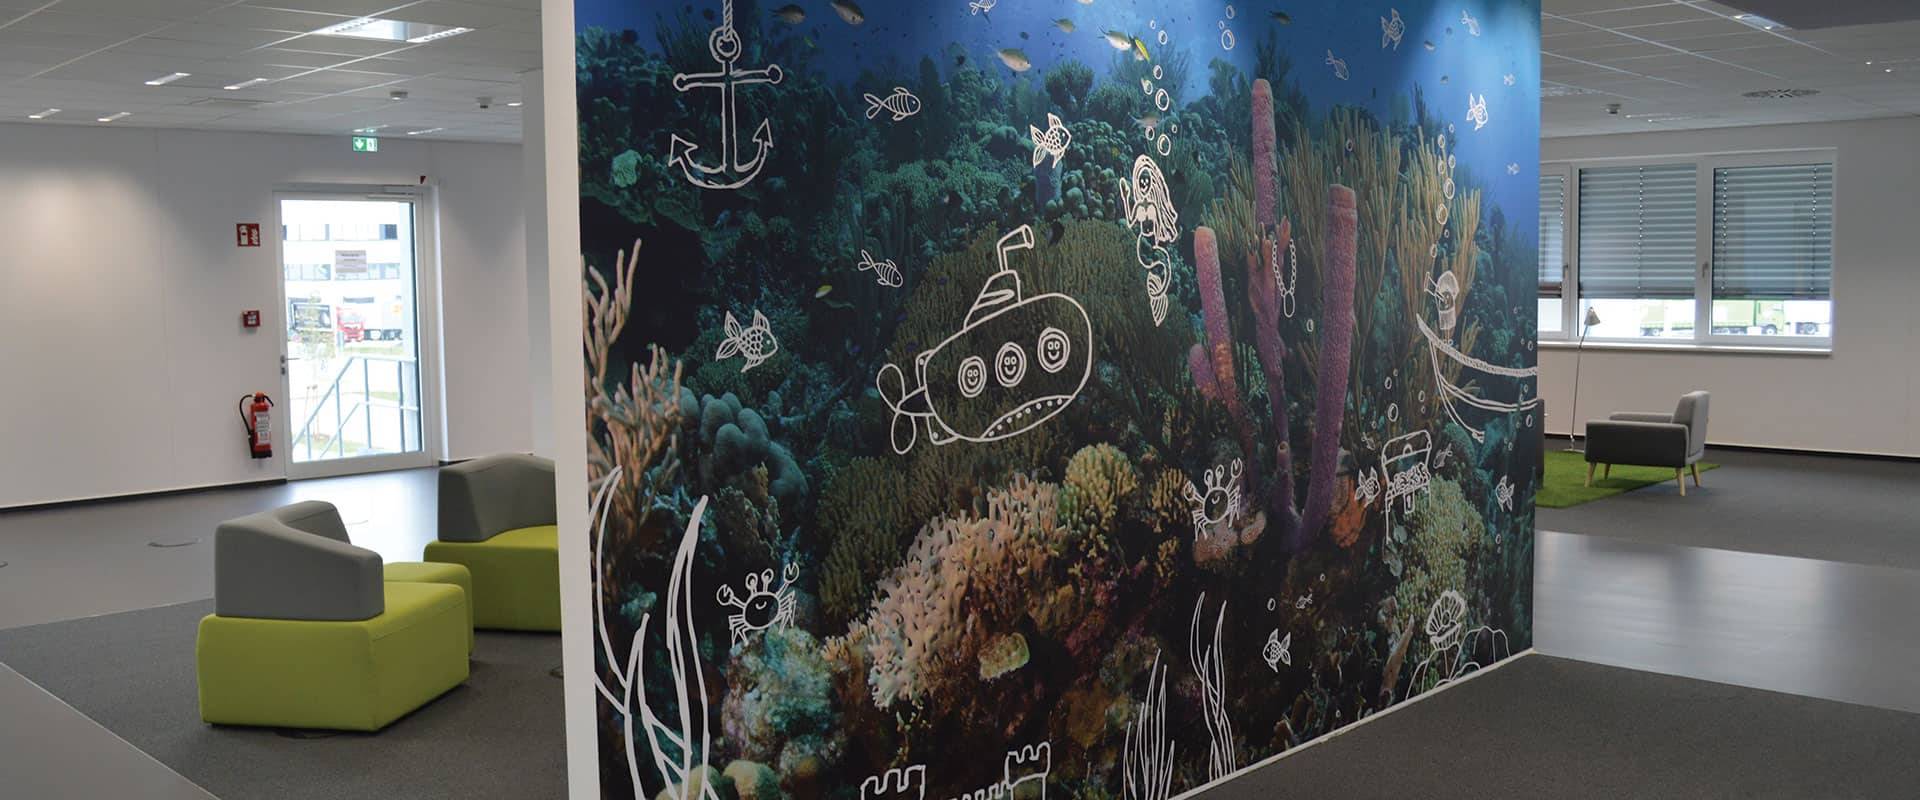 Sea life wallpaper mockup in AO.com office